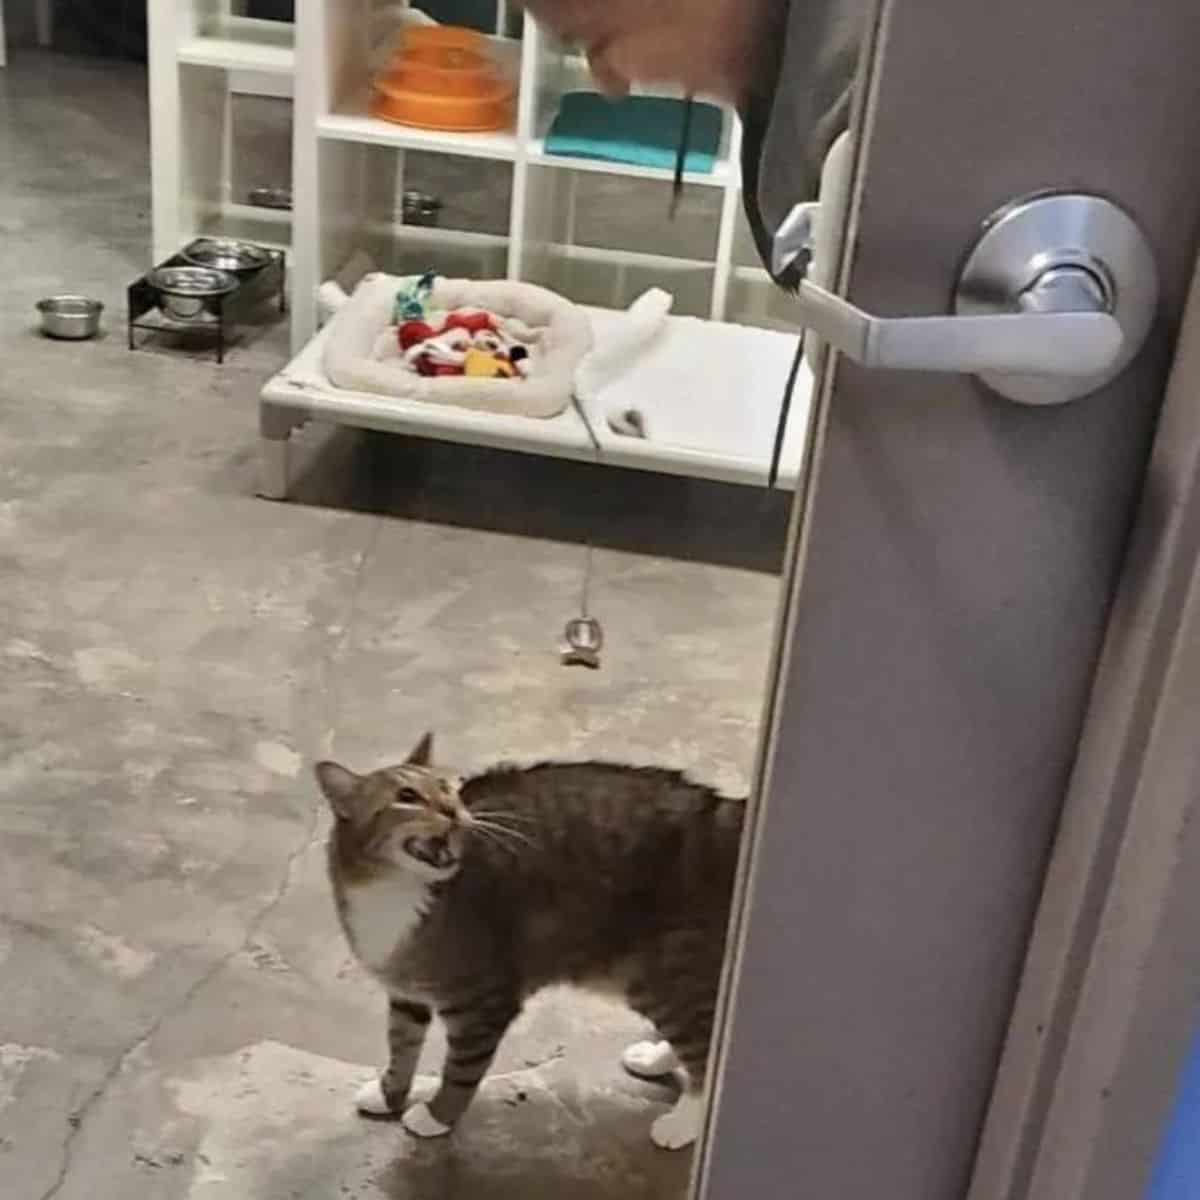 grumpy cat looking at the staff member